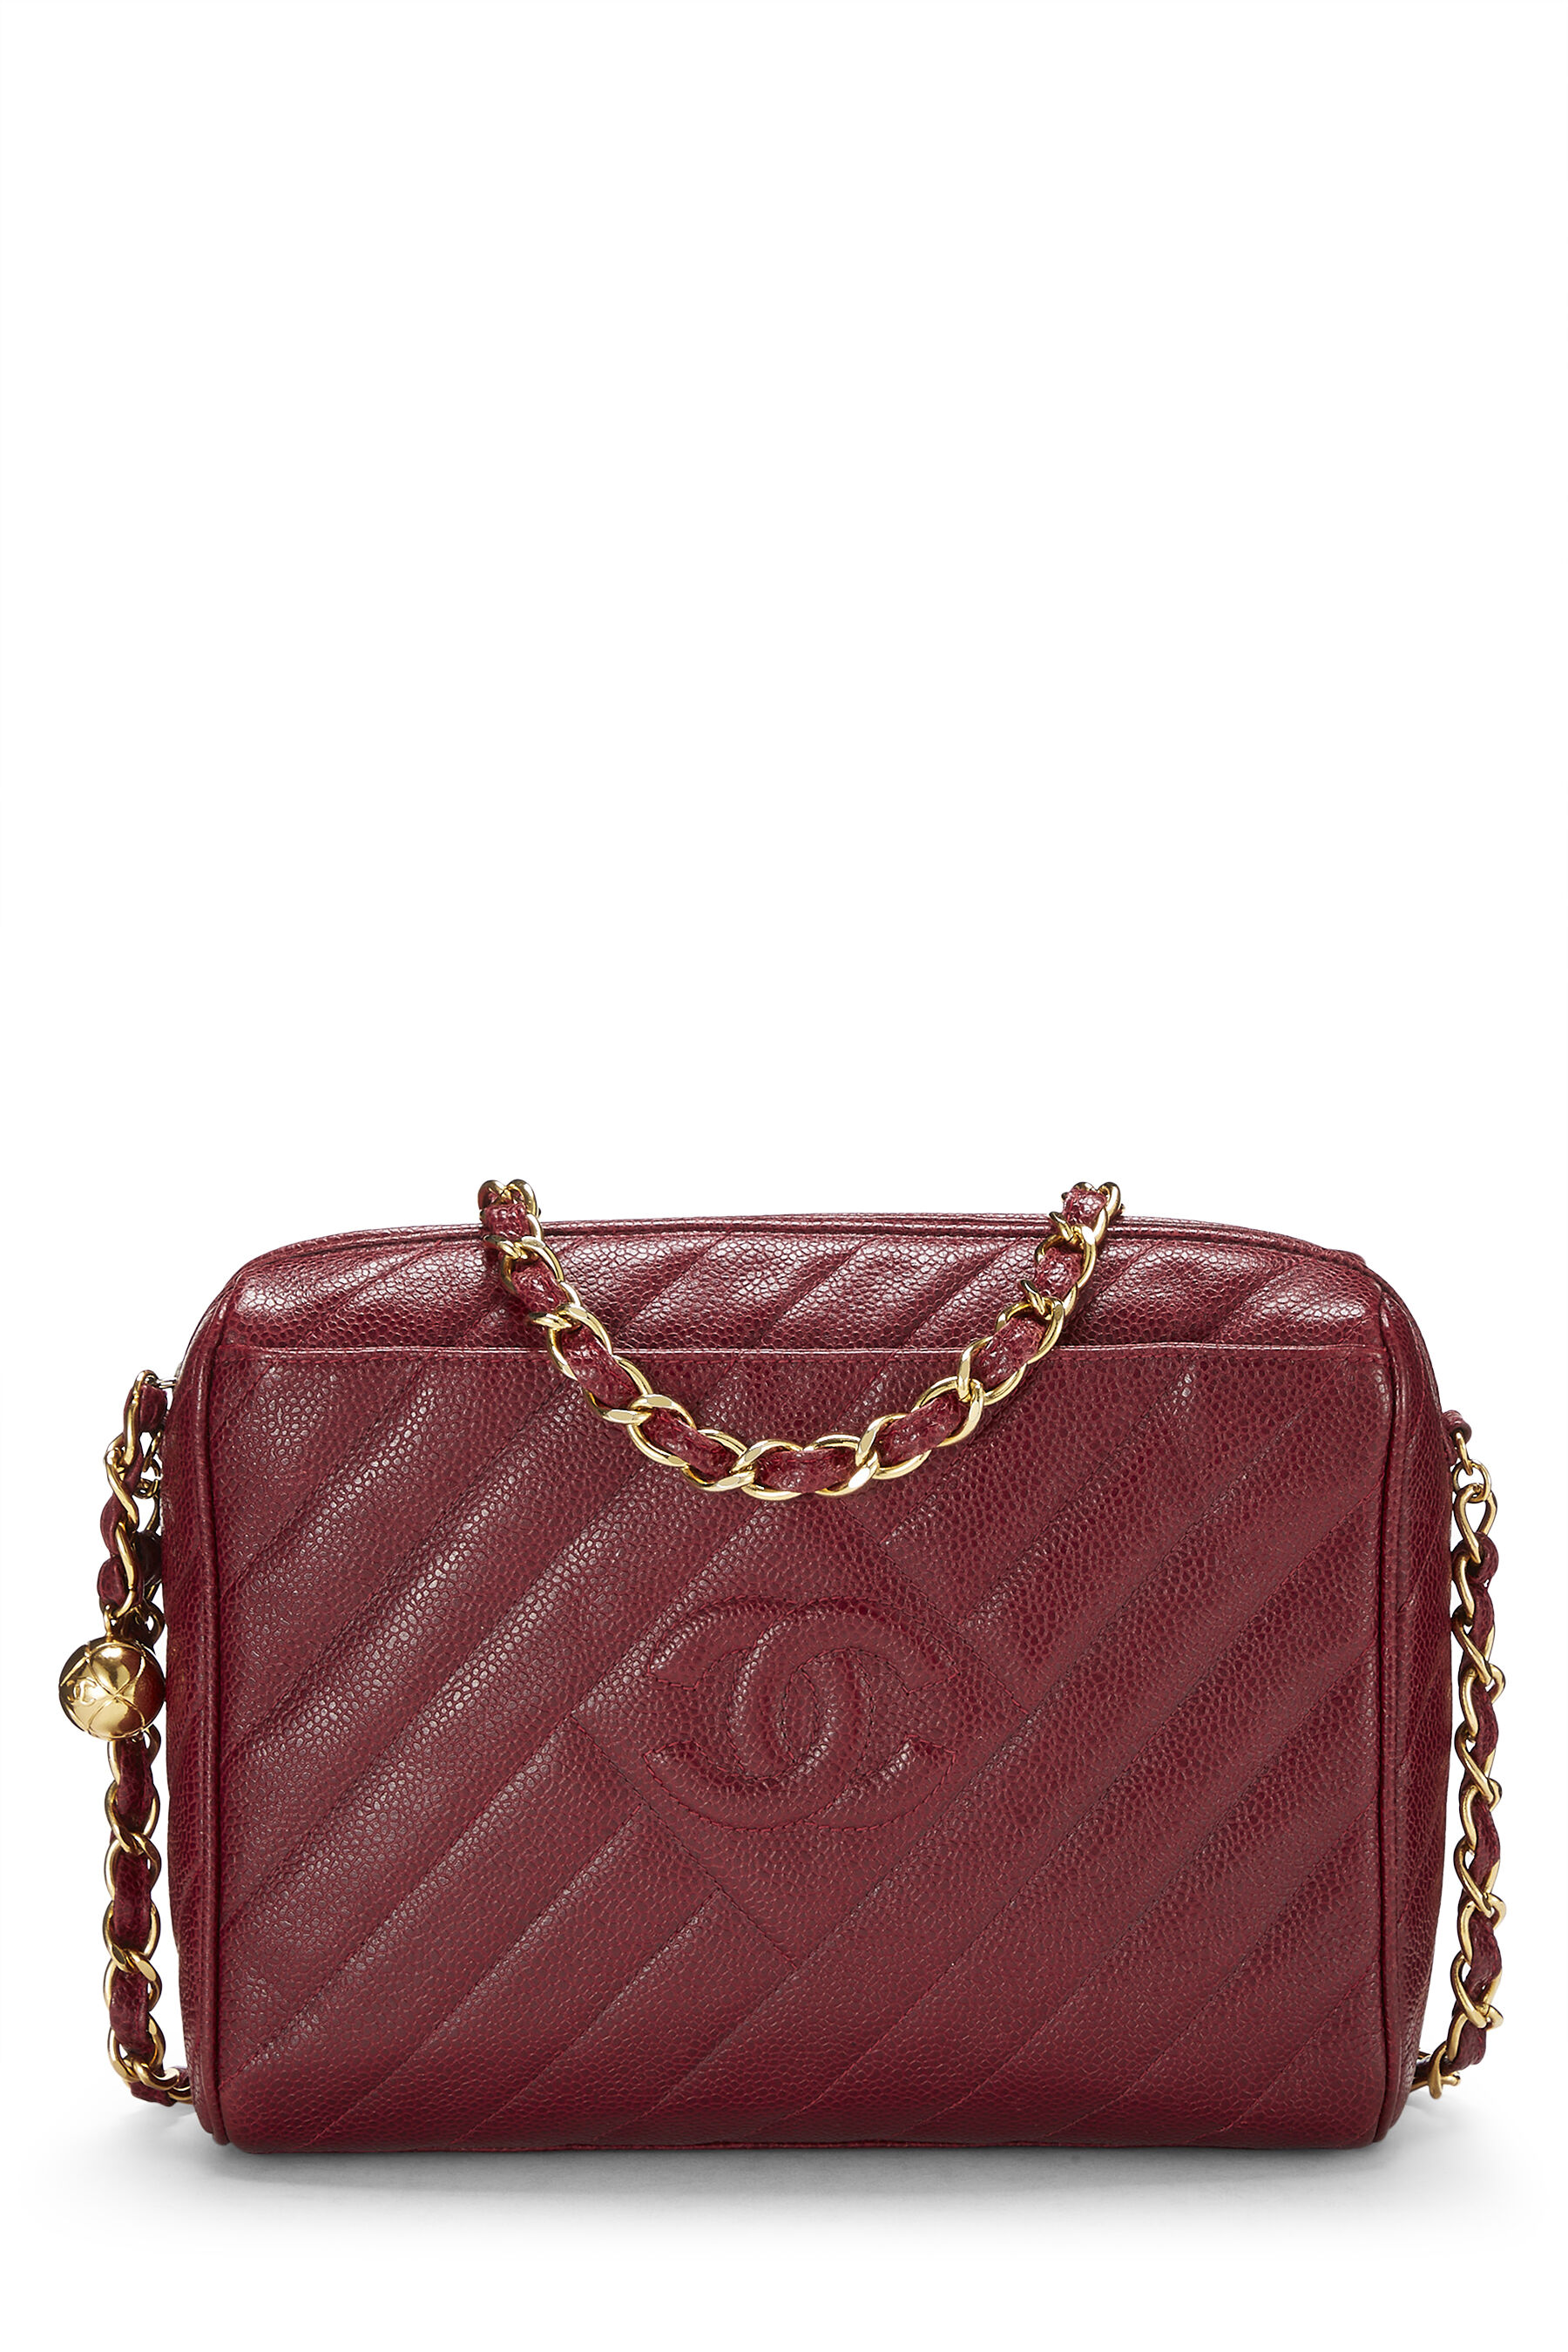 Chanel Women's Shoulder Bag Matelasse Red Leather 18x23x6.5cm